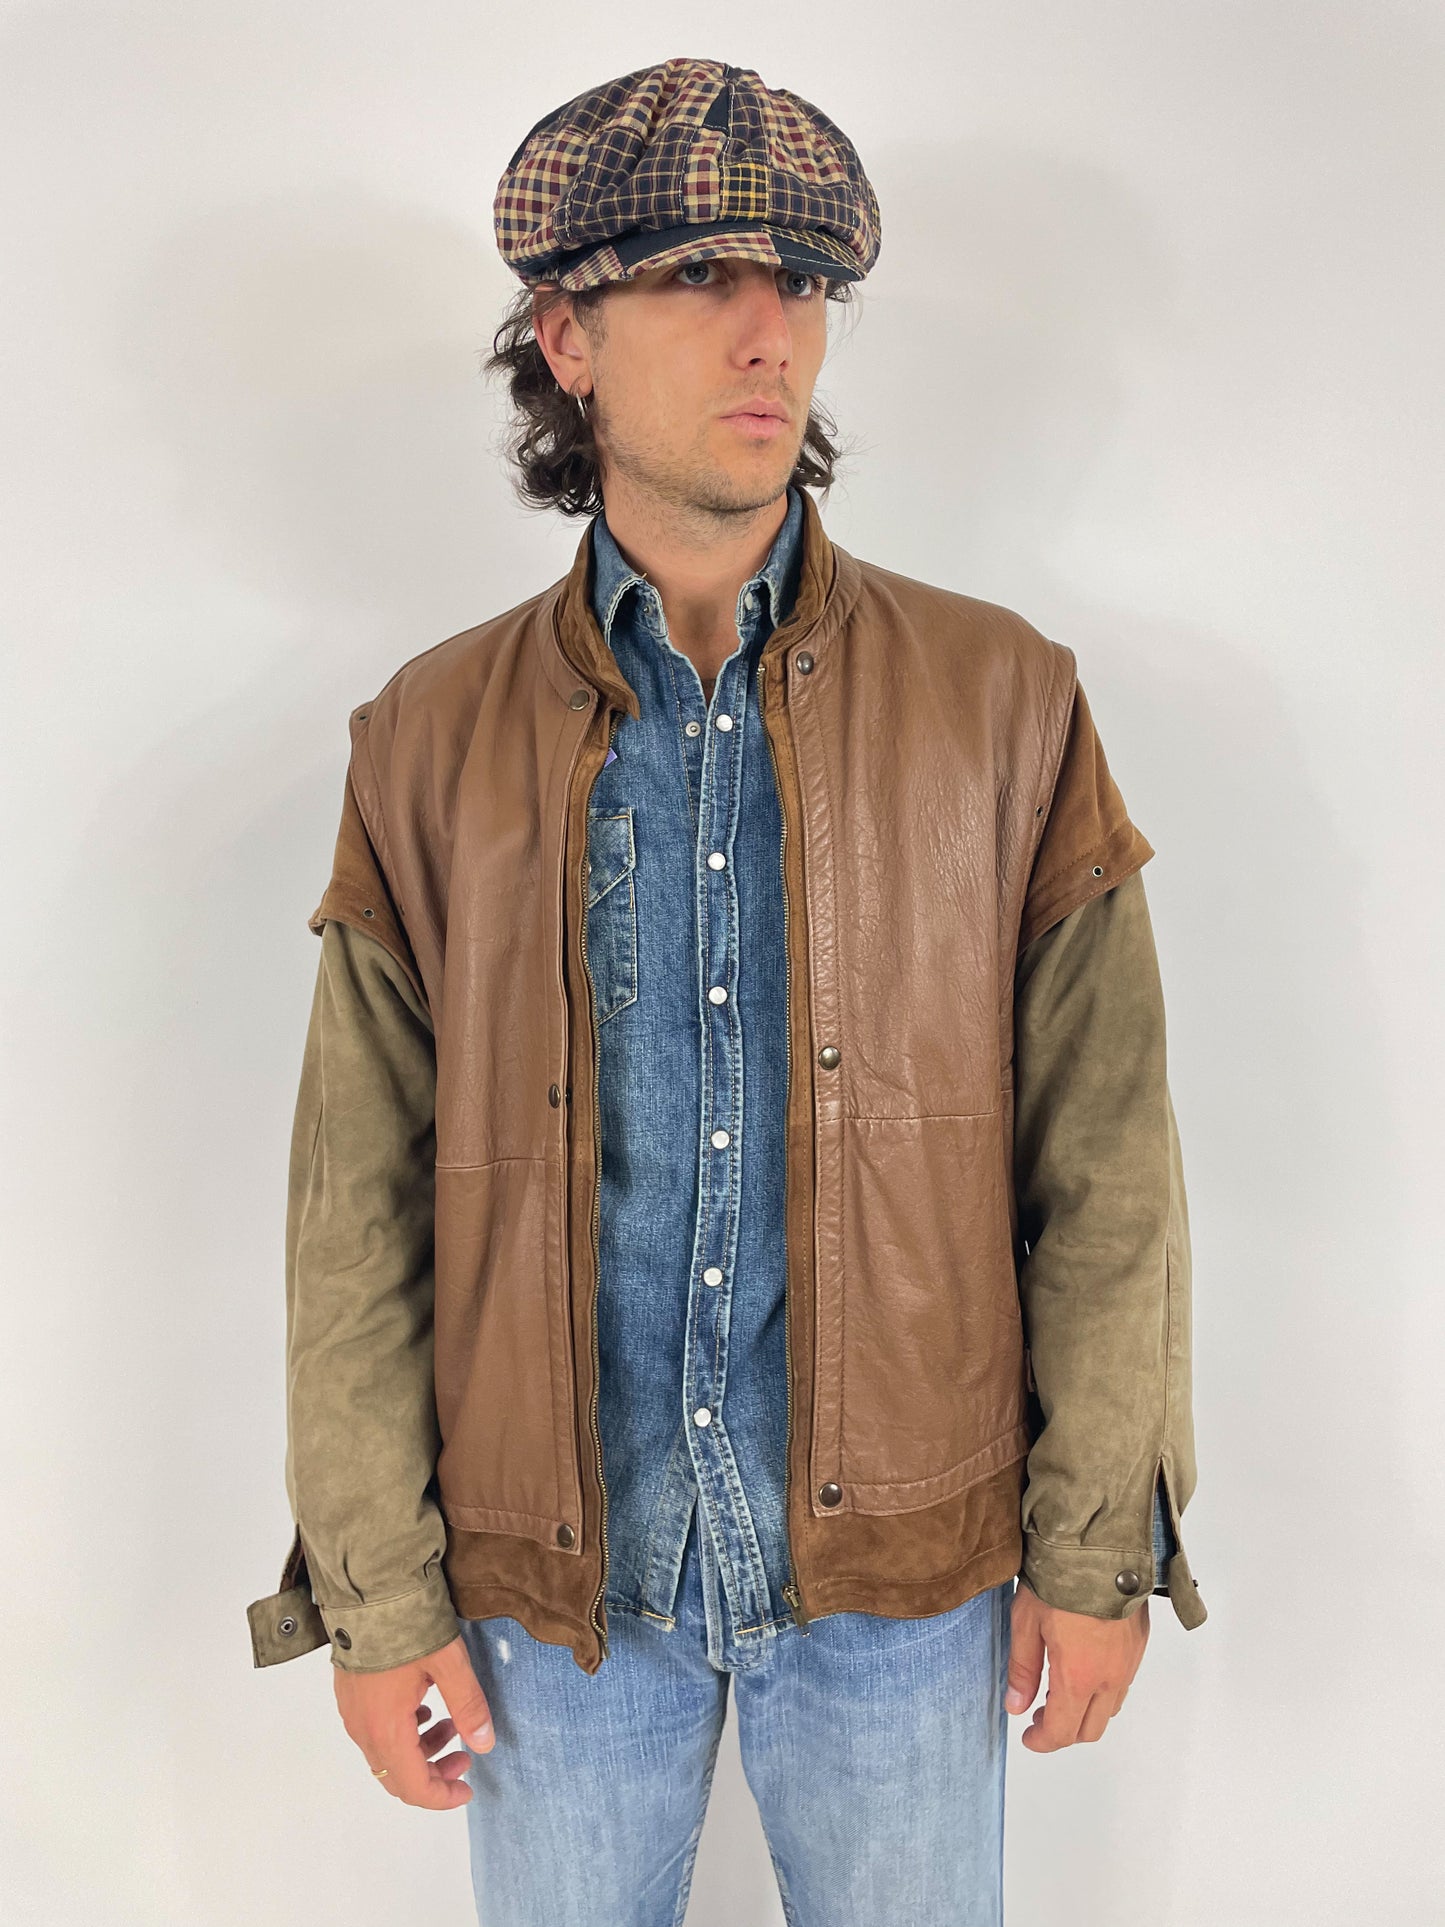 Osvaldo Testa jacket - Leather and suede